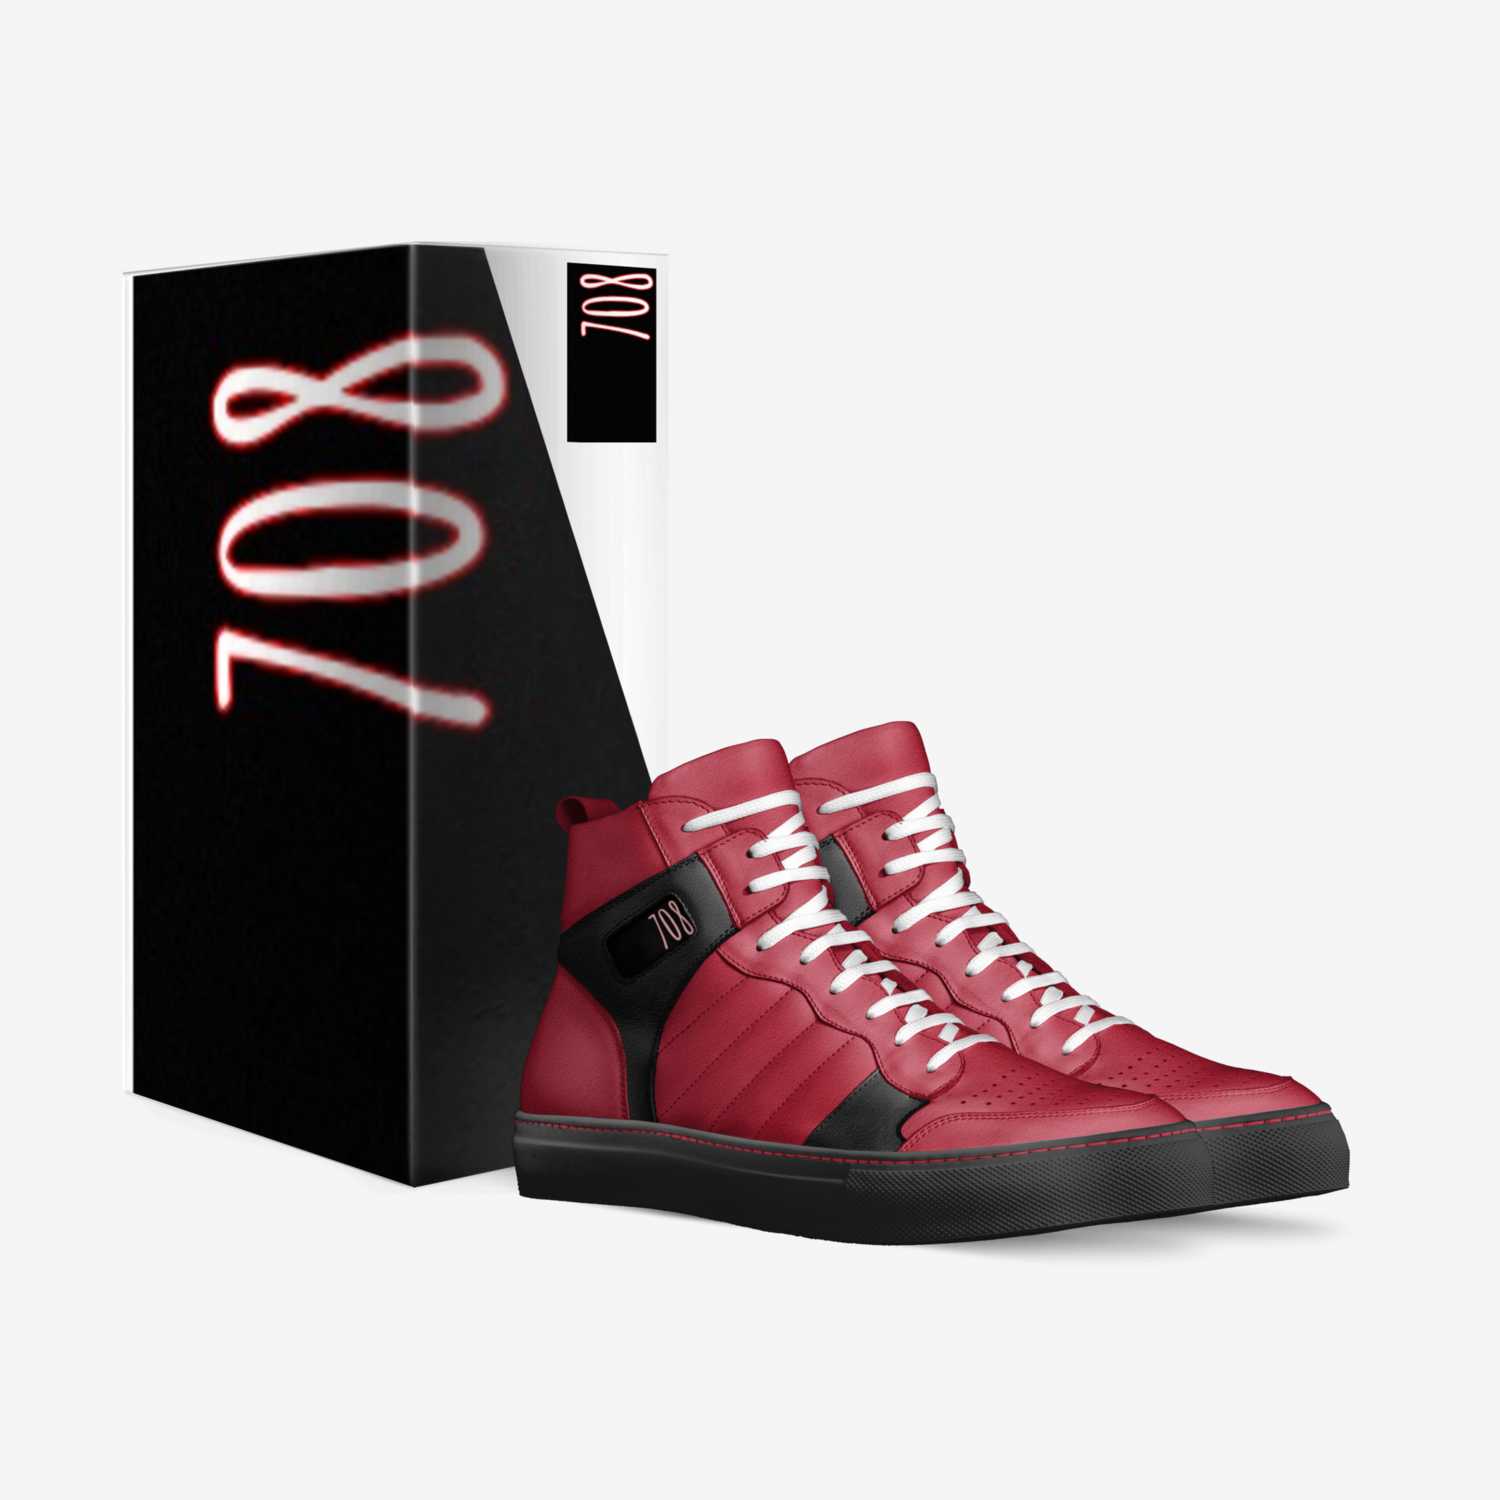 Gang(Star) custom made in Italy shoes by Clifford Raubenheimer | Box view